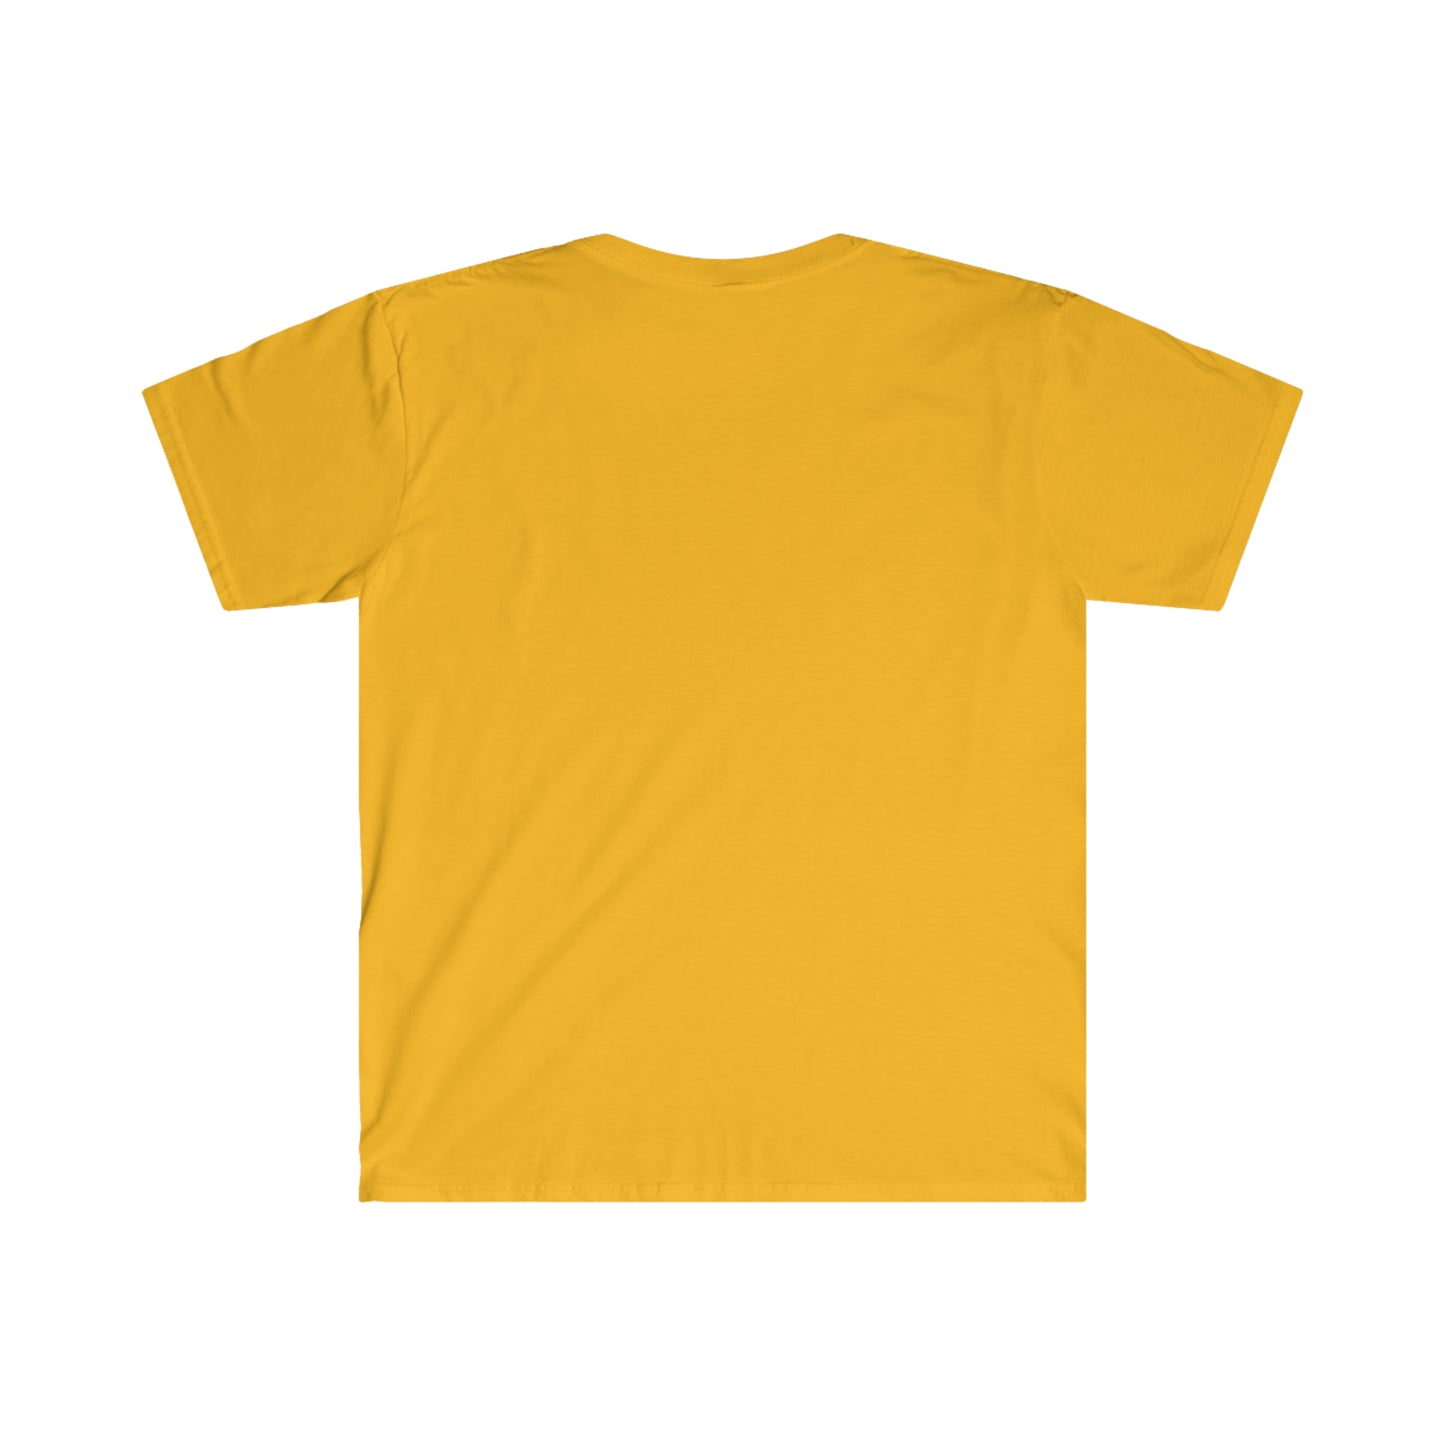 Yoga Deer VFW 1 Unisex Softstyle T-Shirt